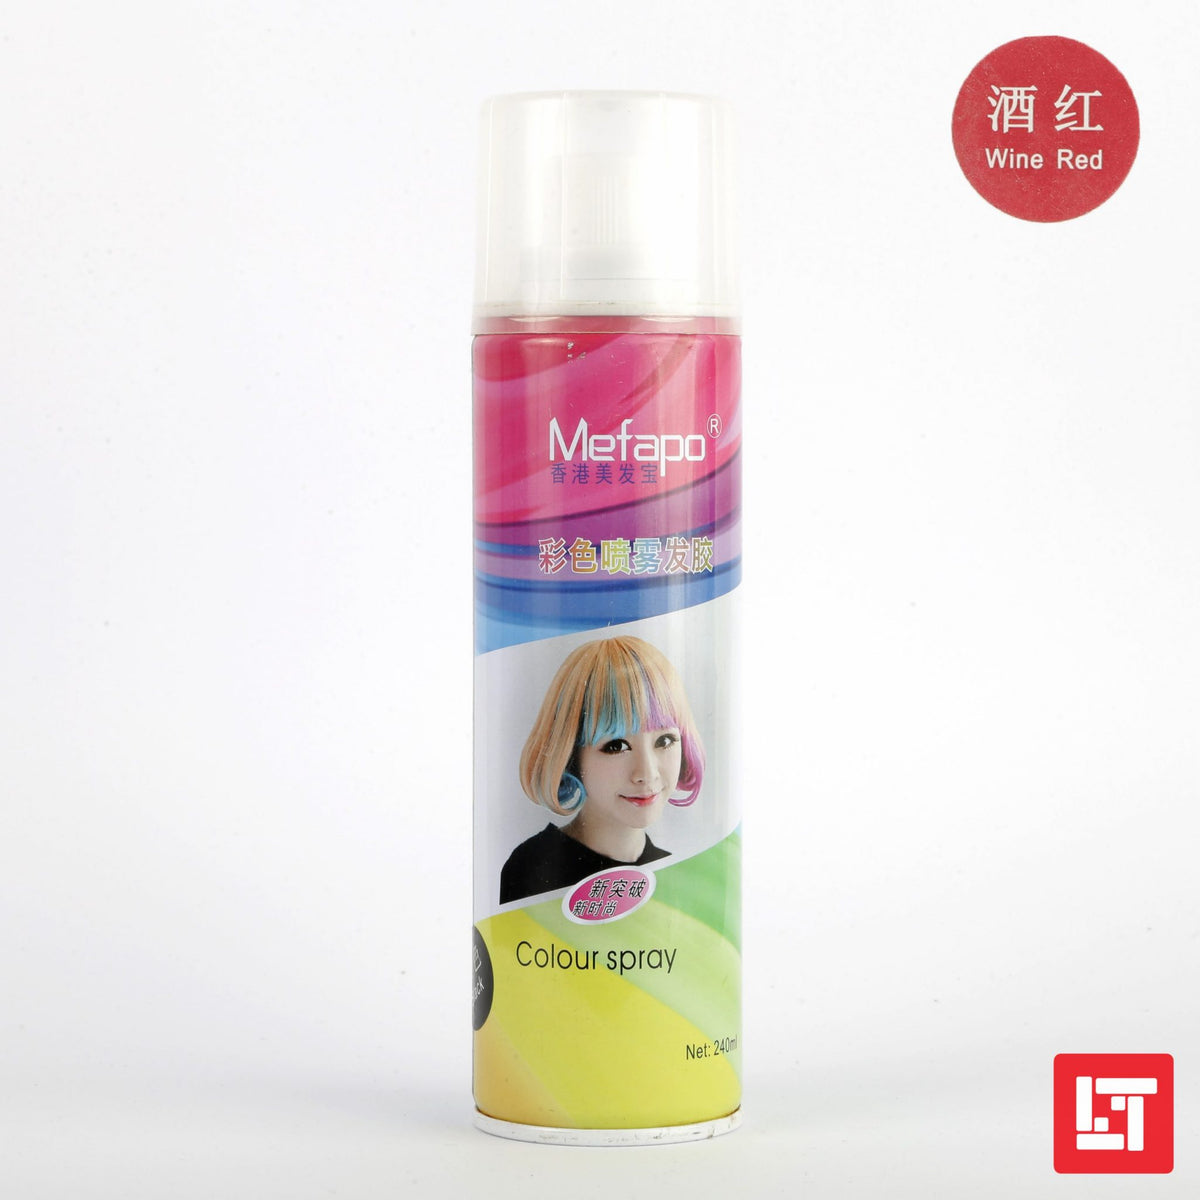 Mefapo Color Hair Spray 240ml Wine Red freeshipping - lasertag.pk